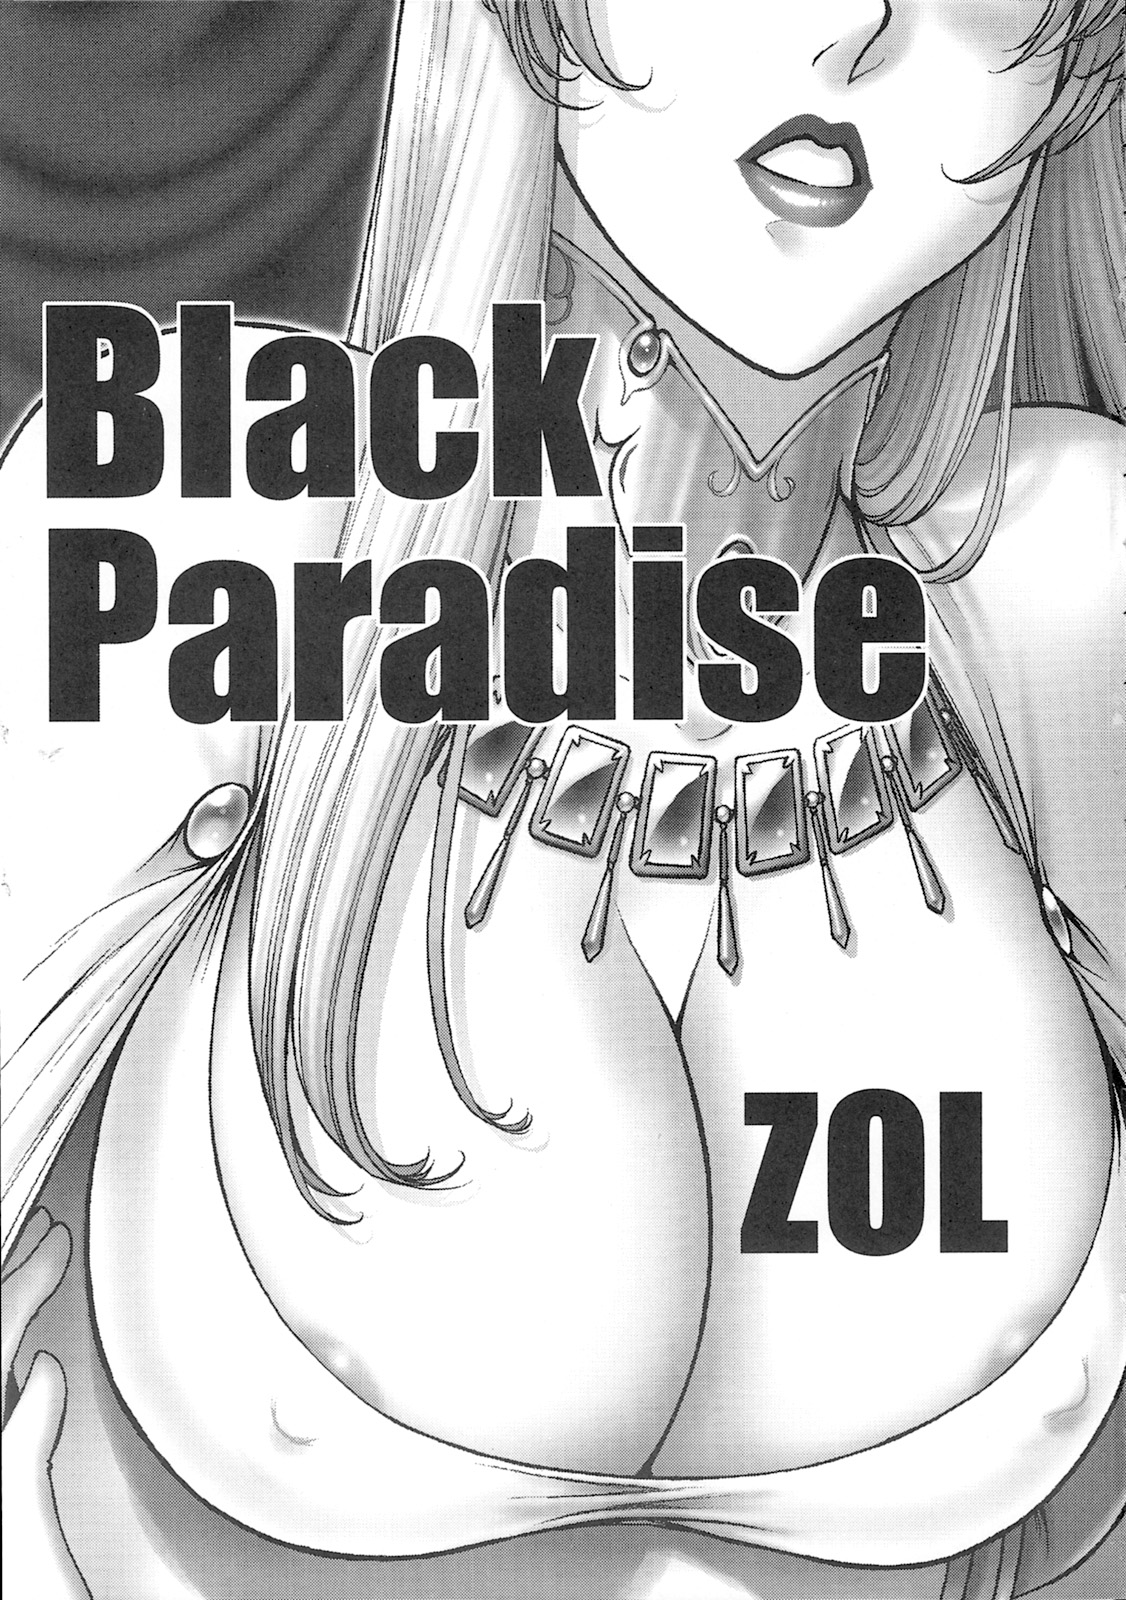 [VETO(ZOL)] Black Paradise (himekishi lilia) [VETO(ZOL)] Black Paradise (姫騎士リリア)